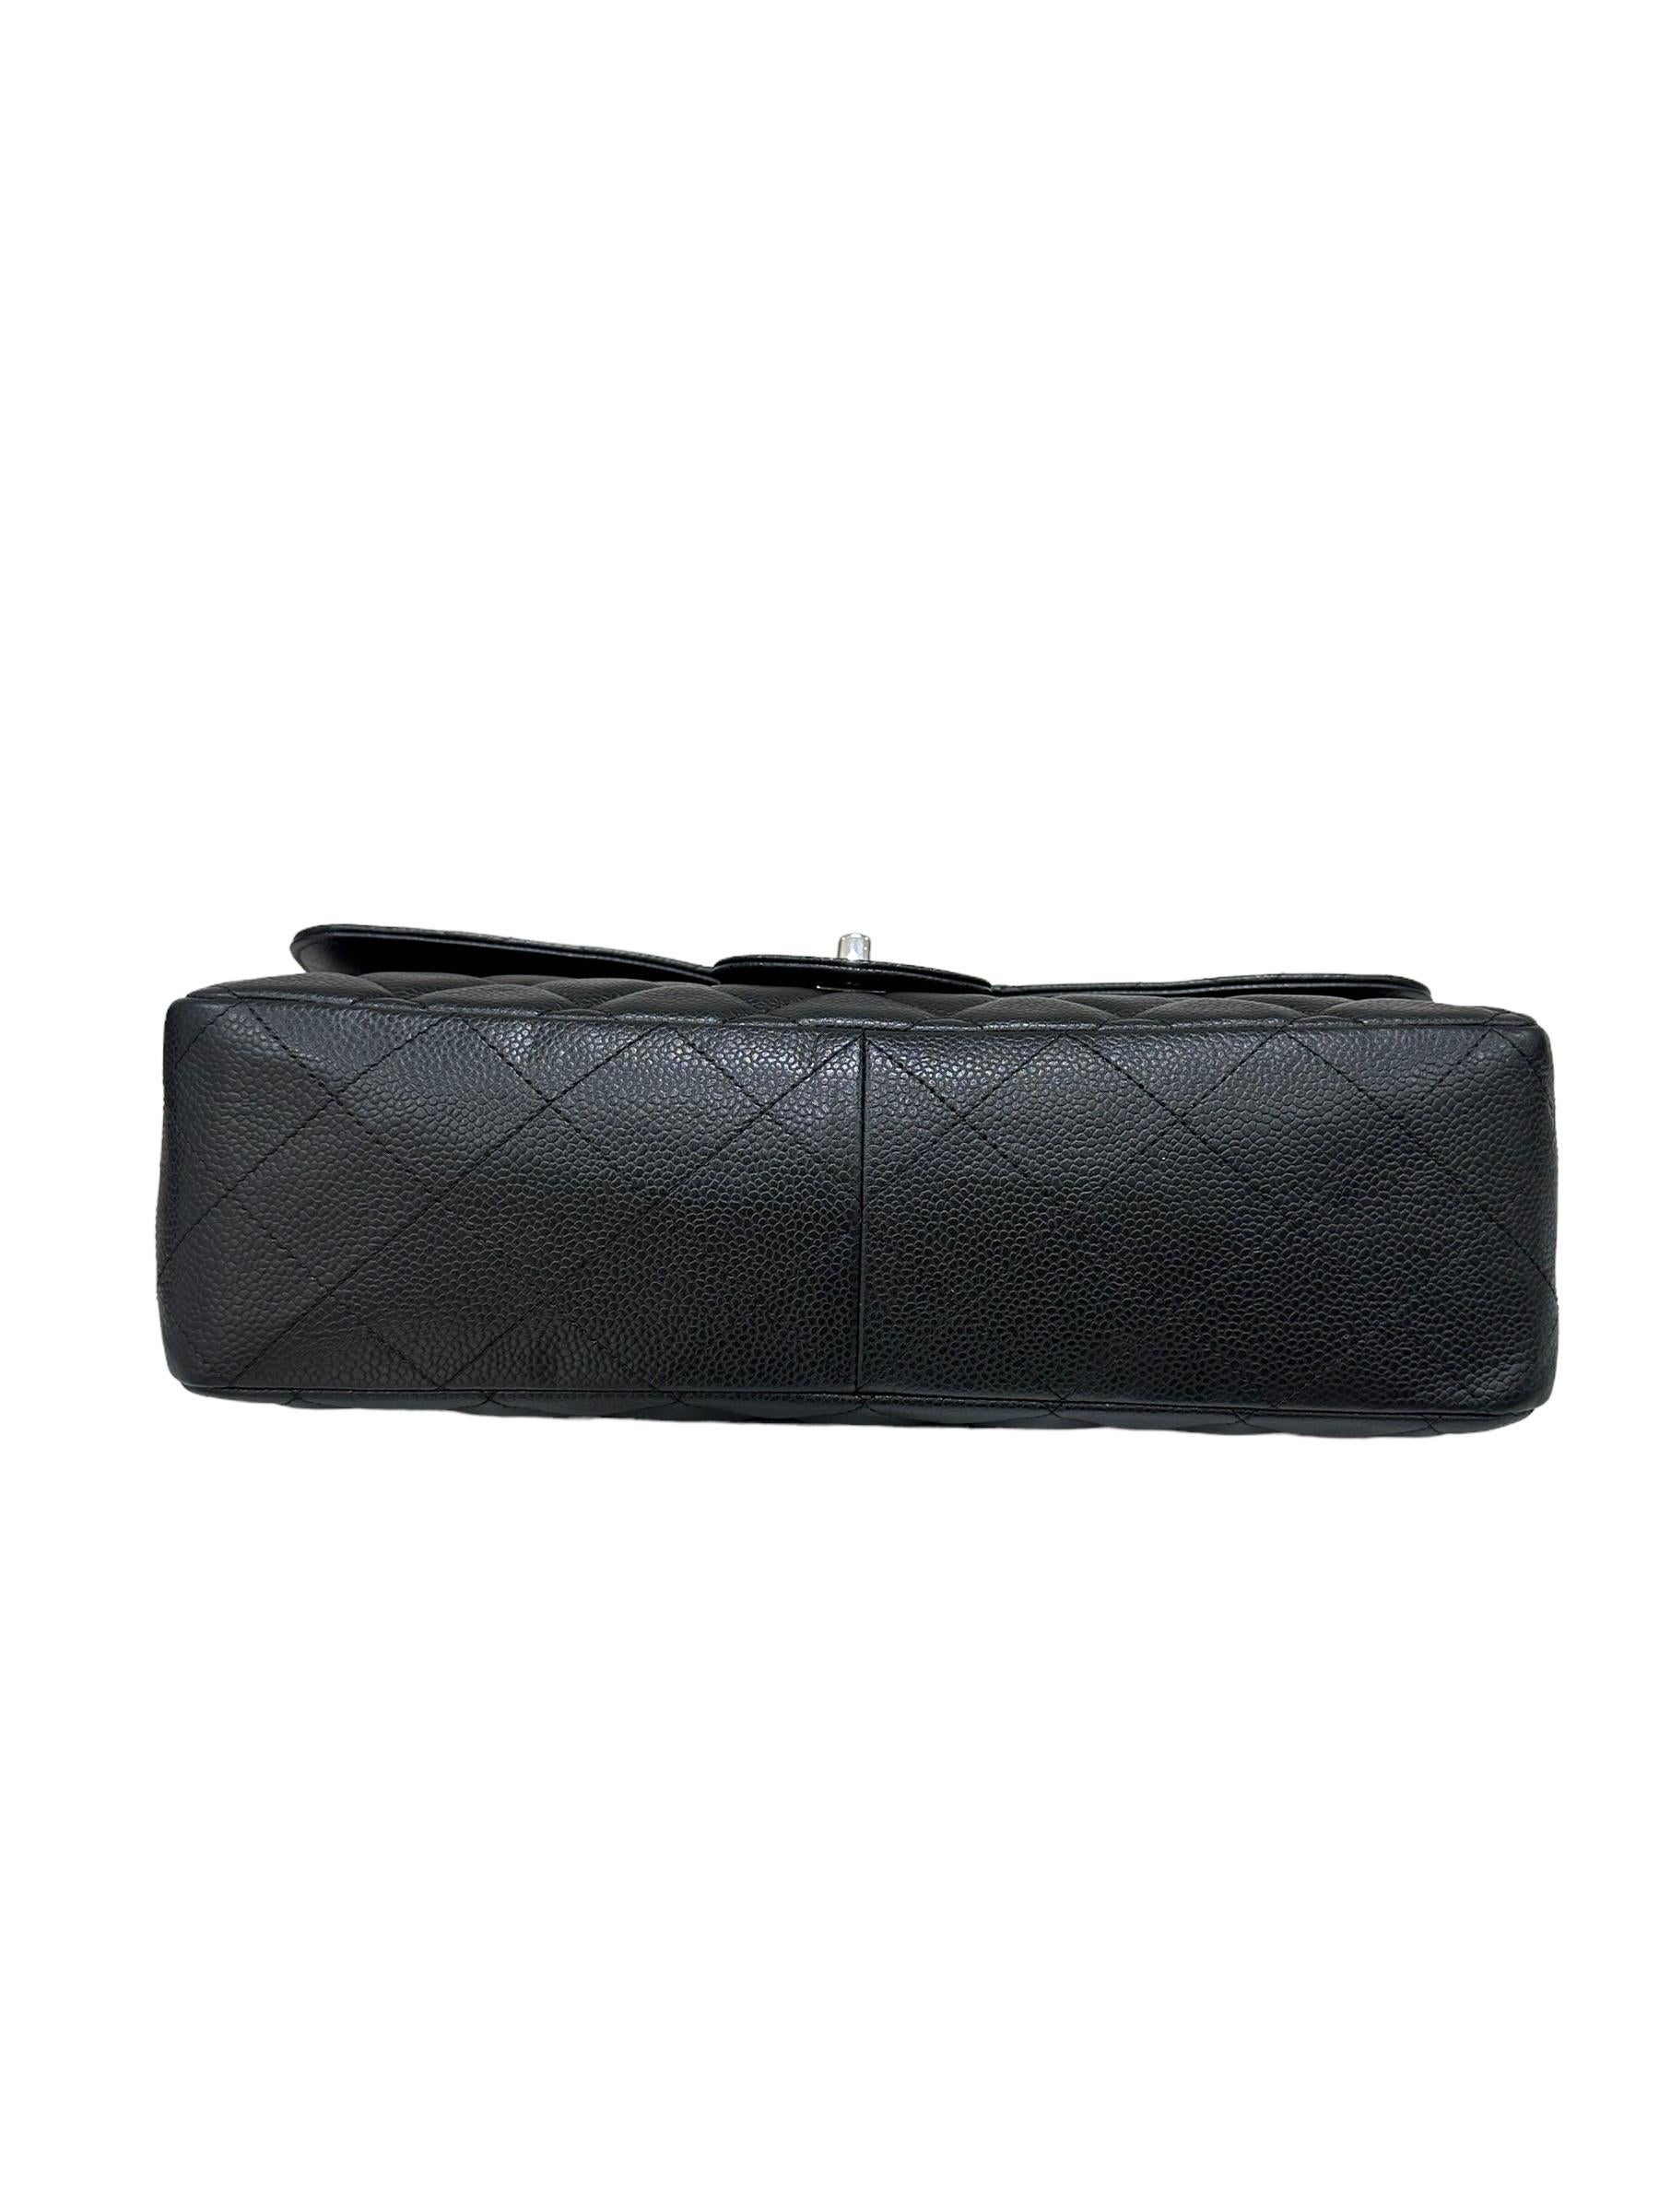 2009 Chanel Jumbo Black Caviar Leather Top Shoulder Bag  For Sale 7